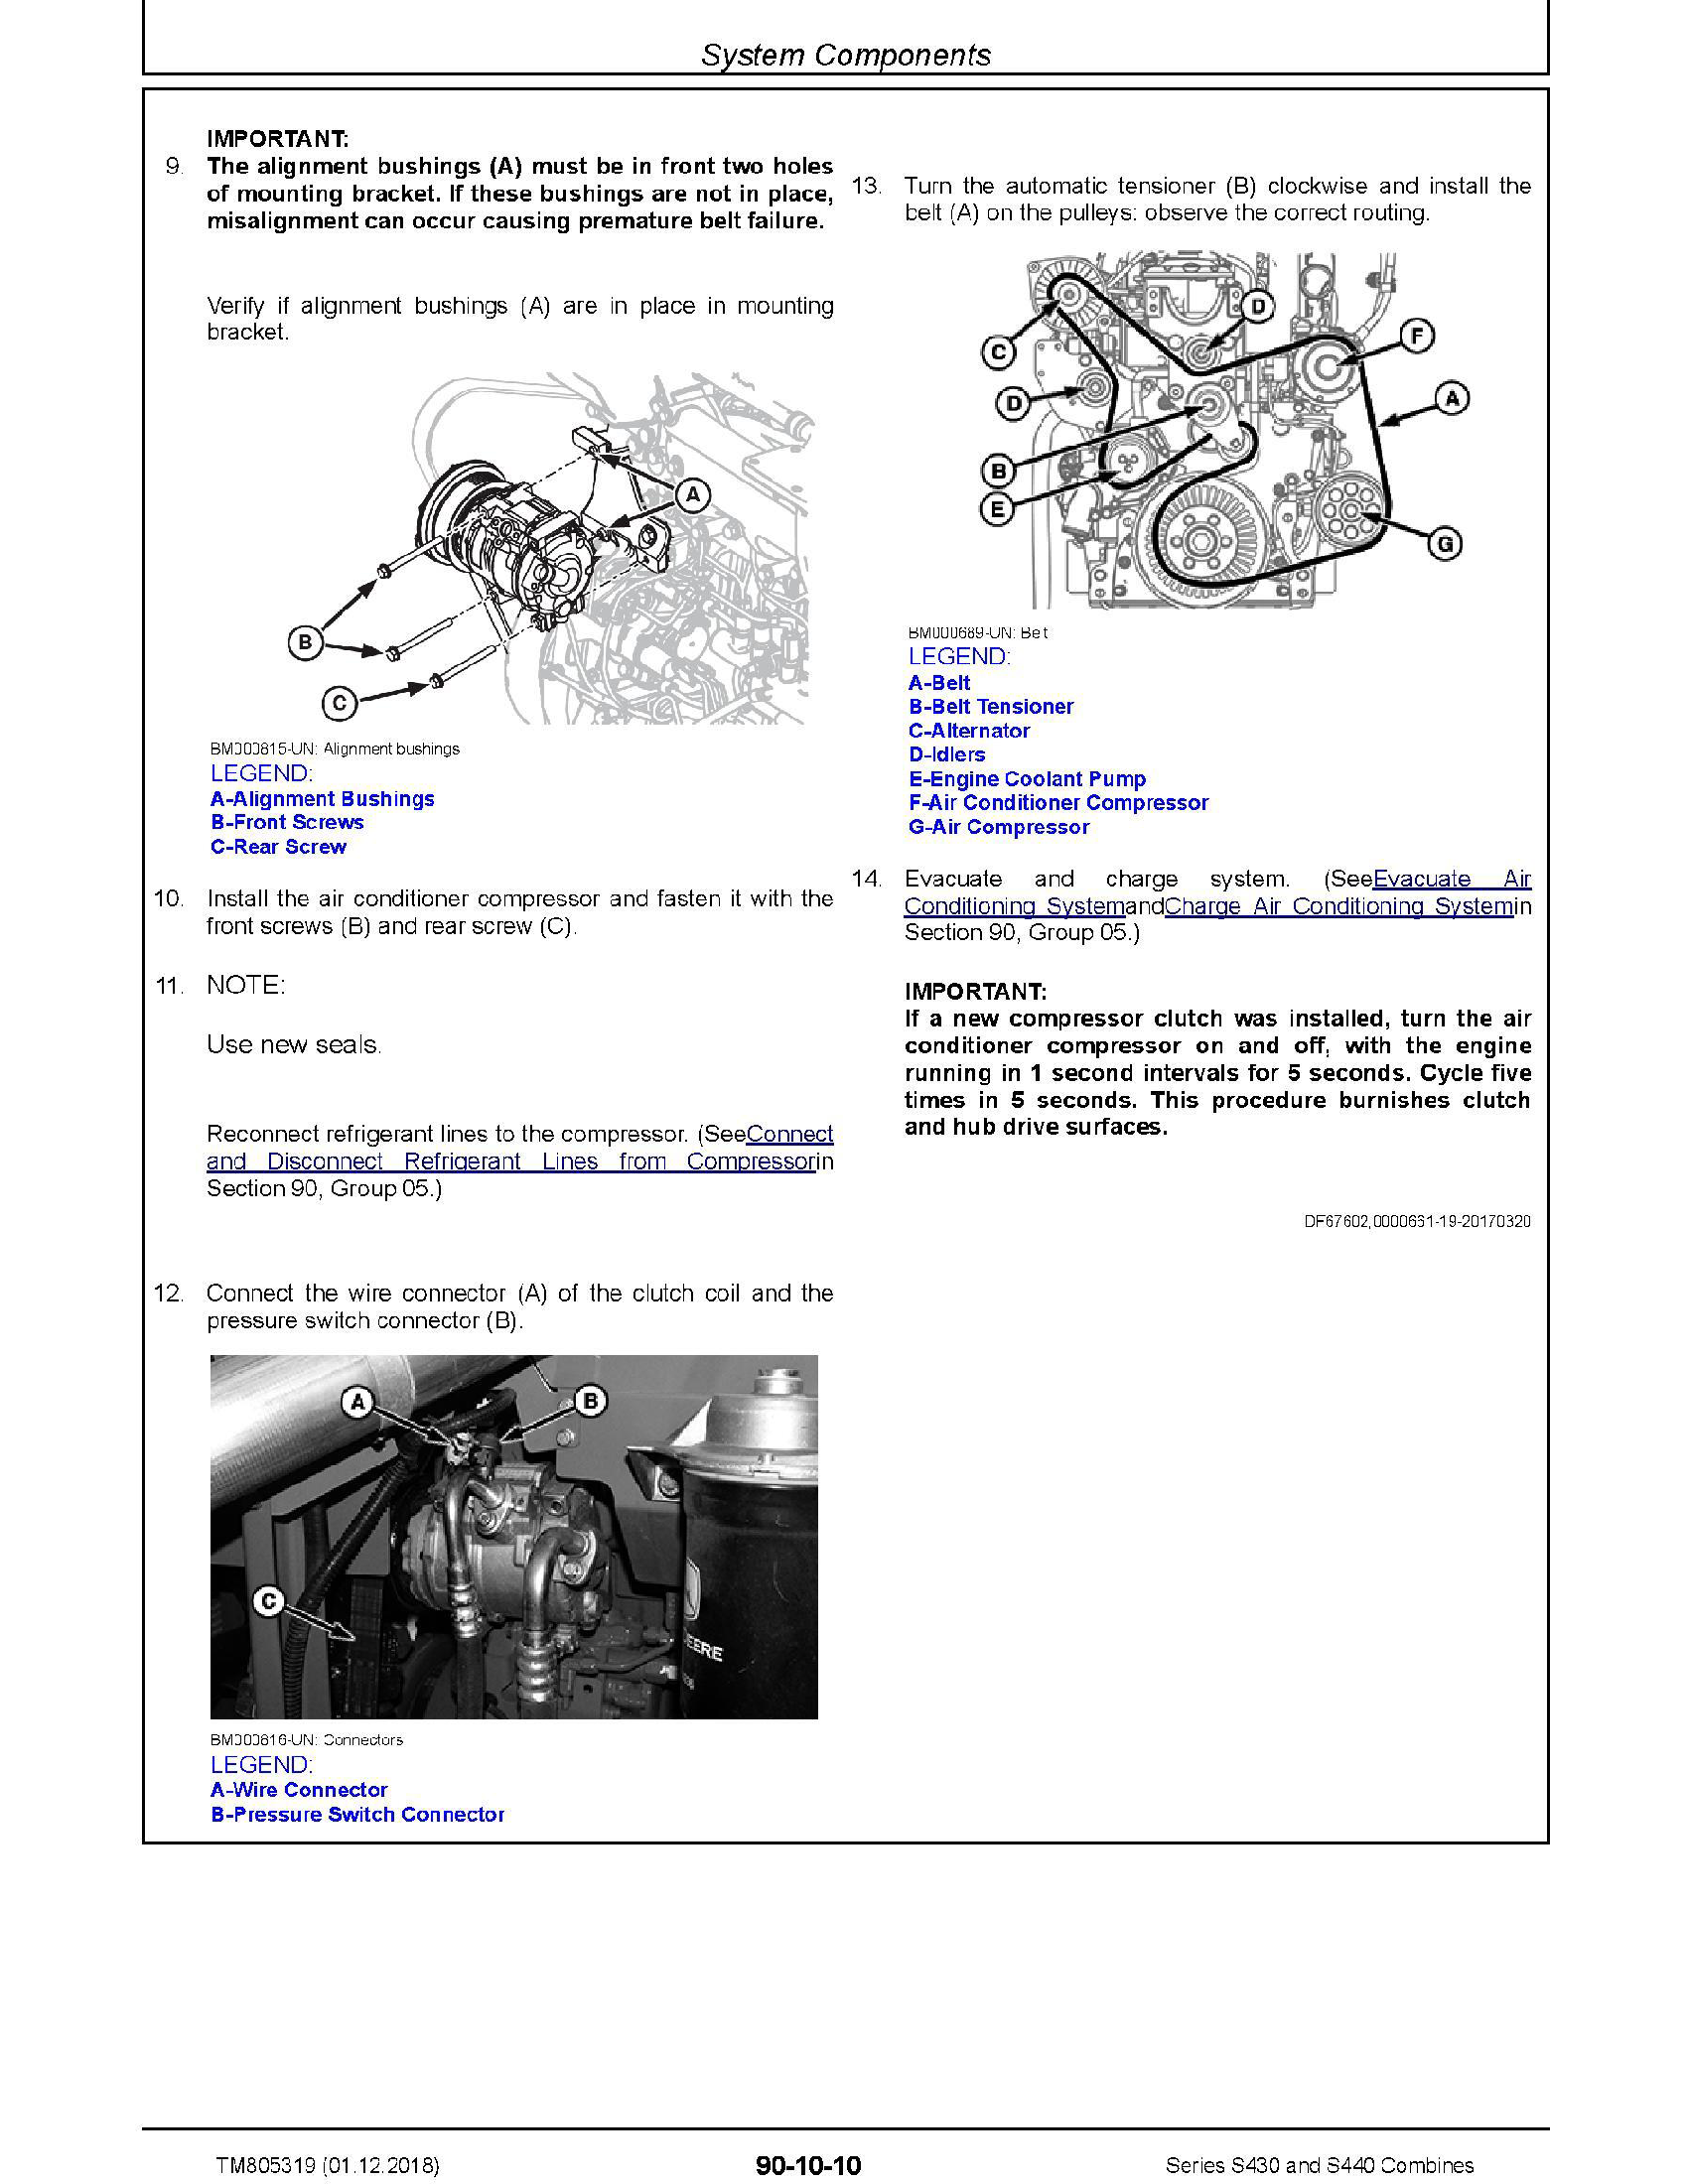 John Deere 315SL manual pdf